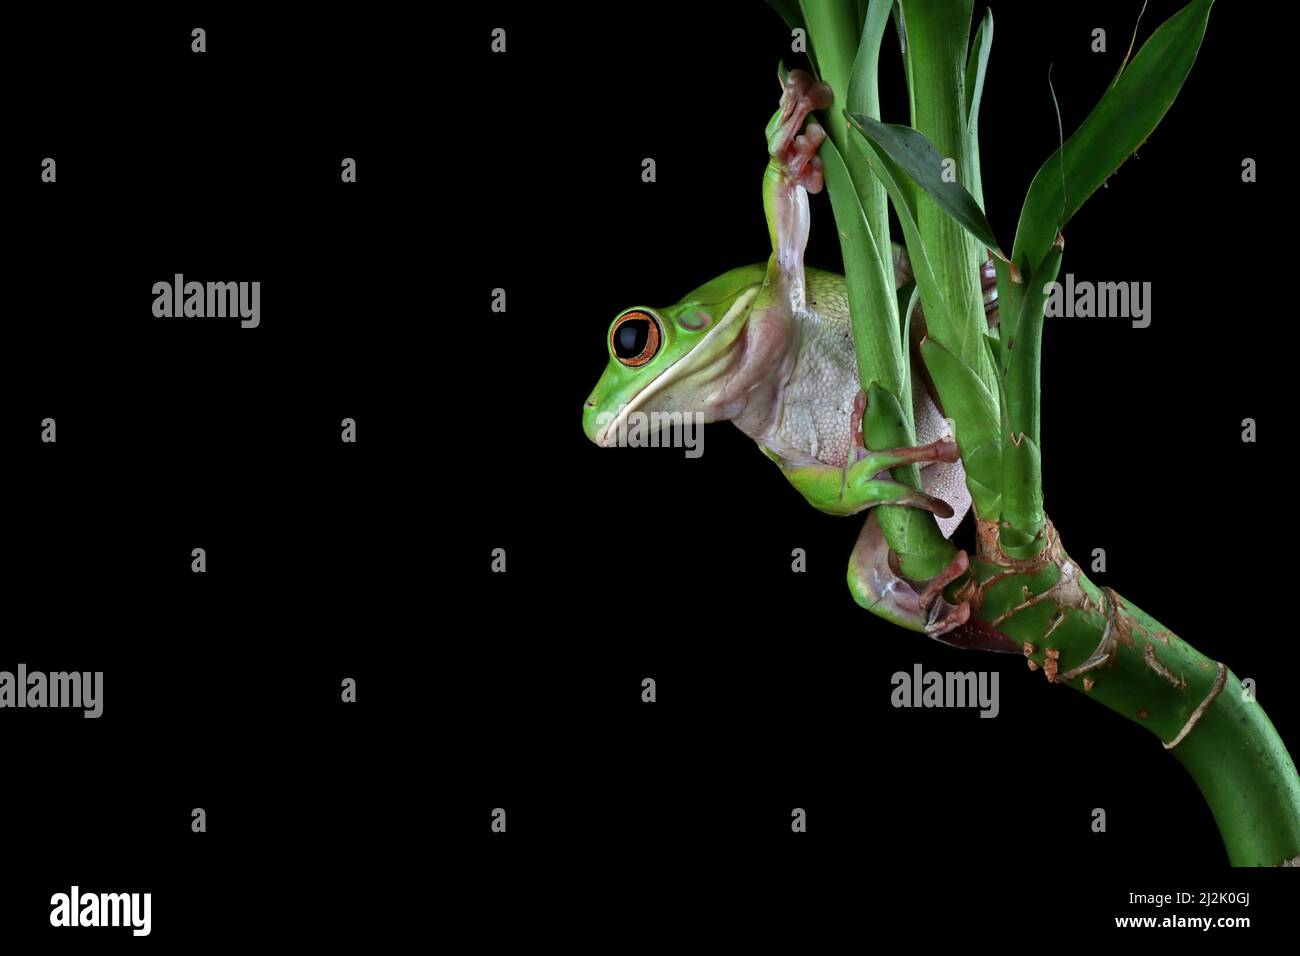 Close-Up of  a white-lipped tree frog (Litoria infrafrenata) on a plant, Indonesia Stock Photo